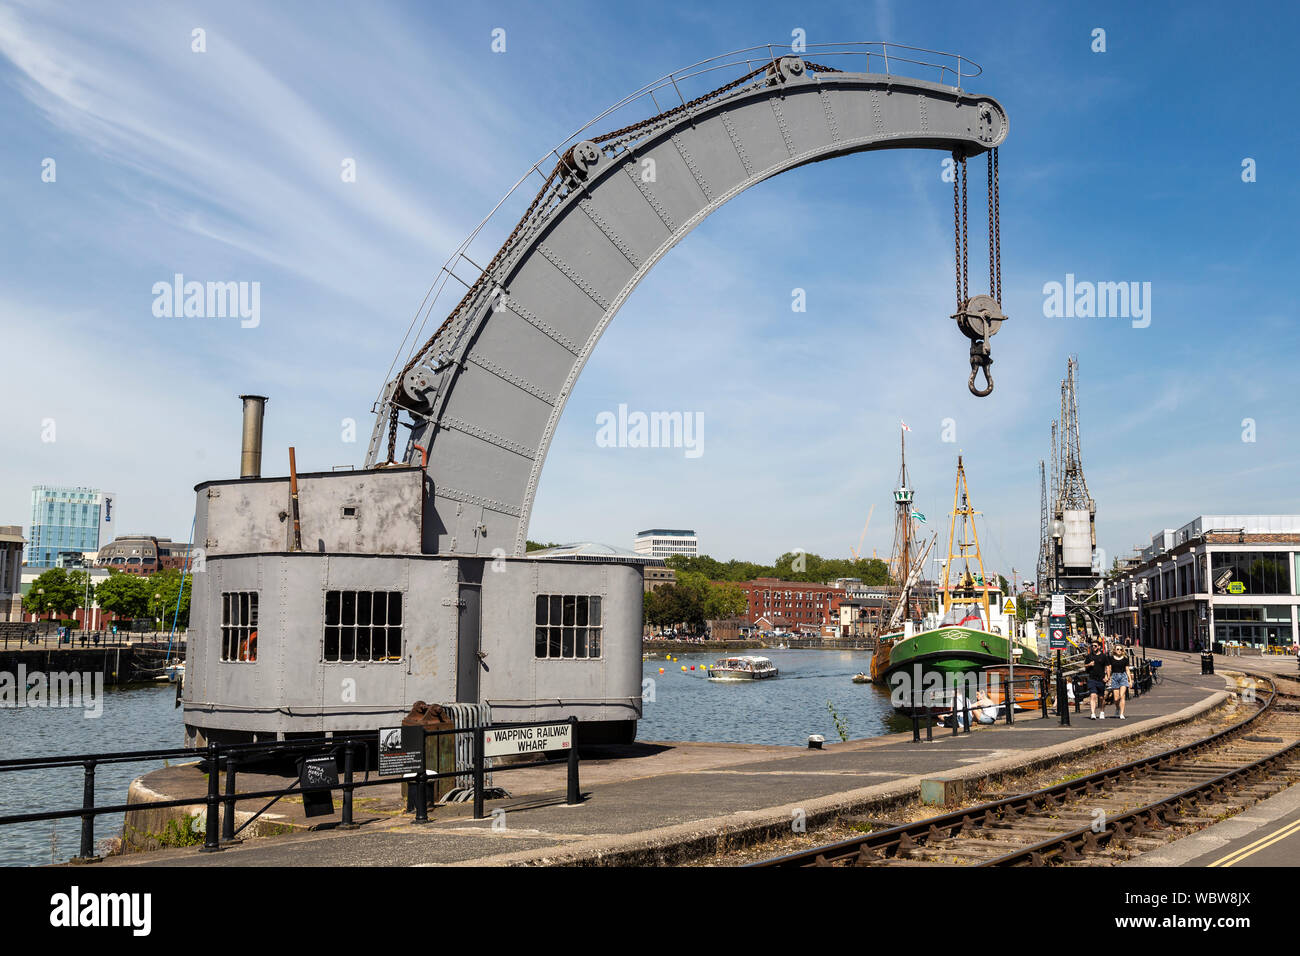 Fairbairn 35 ton steam crane on Wapping Railway Wharf, Bristol, UK Stock Photo